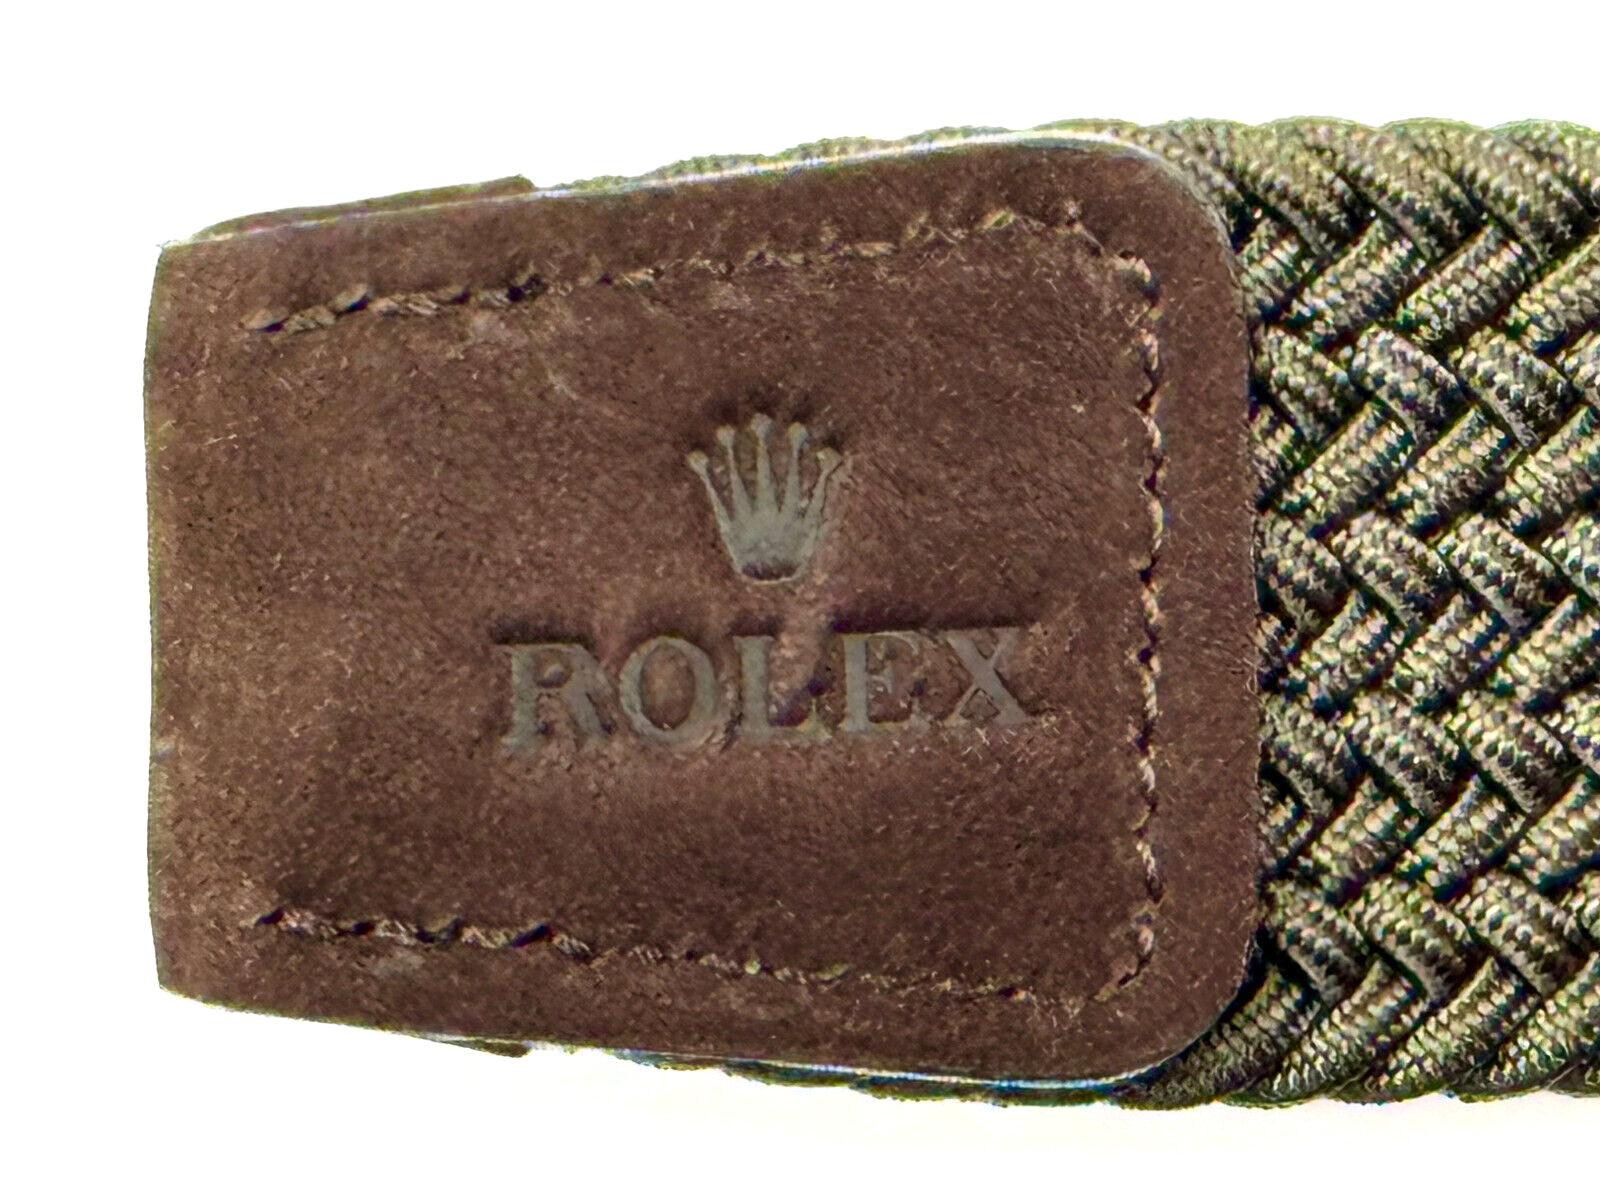 Rolex belt olive green cotton 